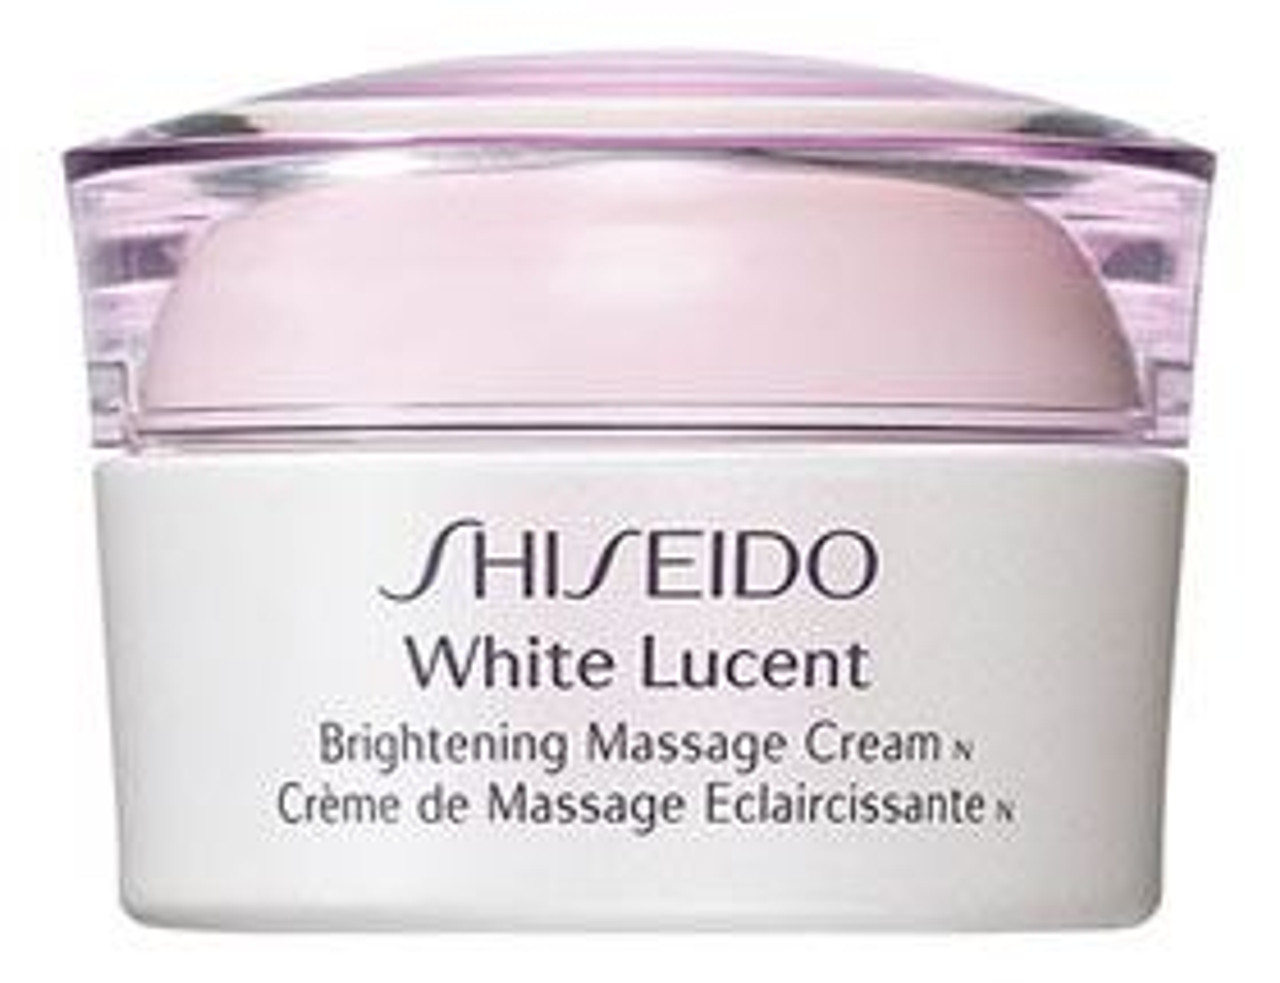 Shiseido White Lucent Brightening Massage Cream, 2.8 oz